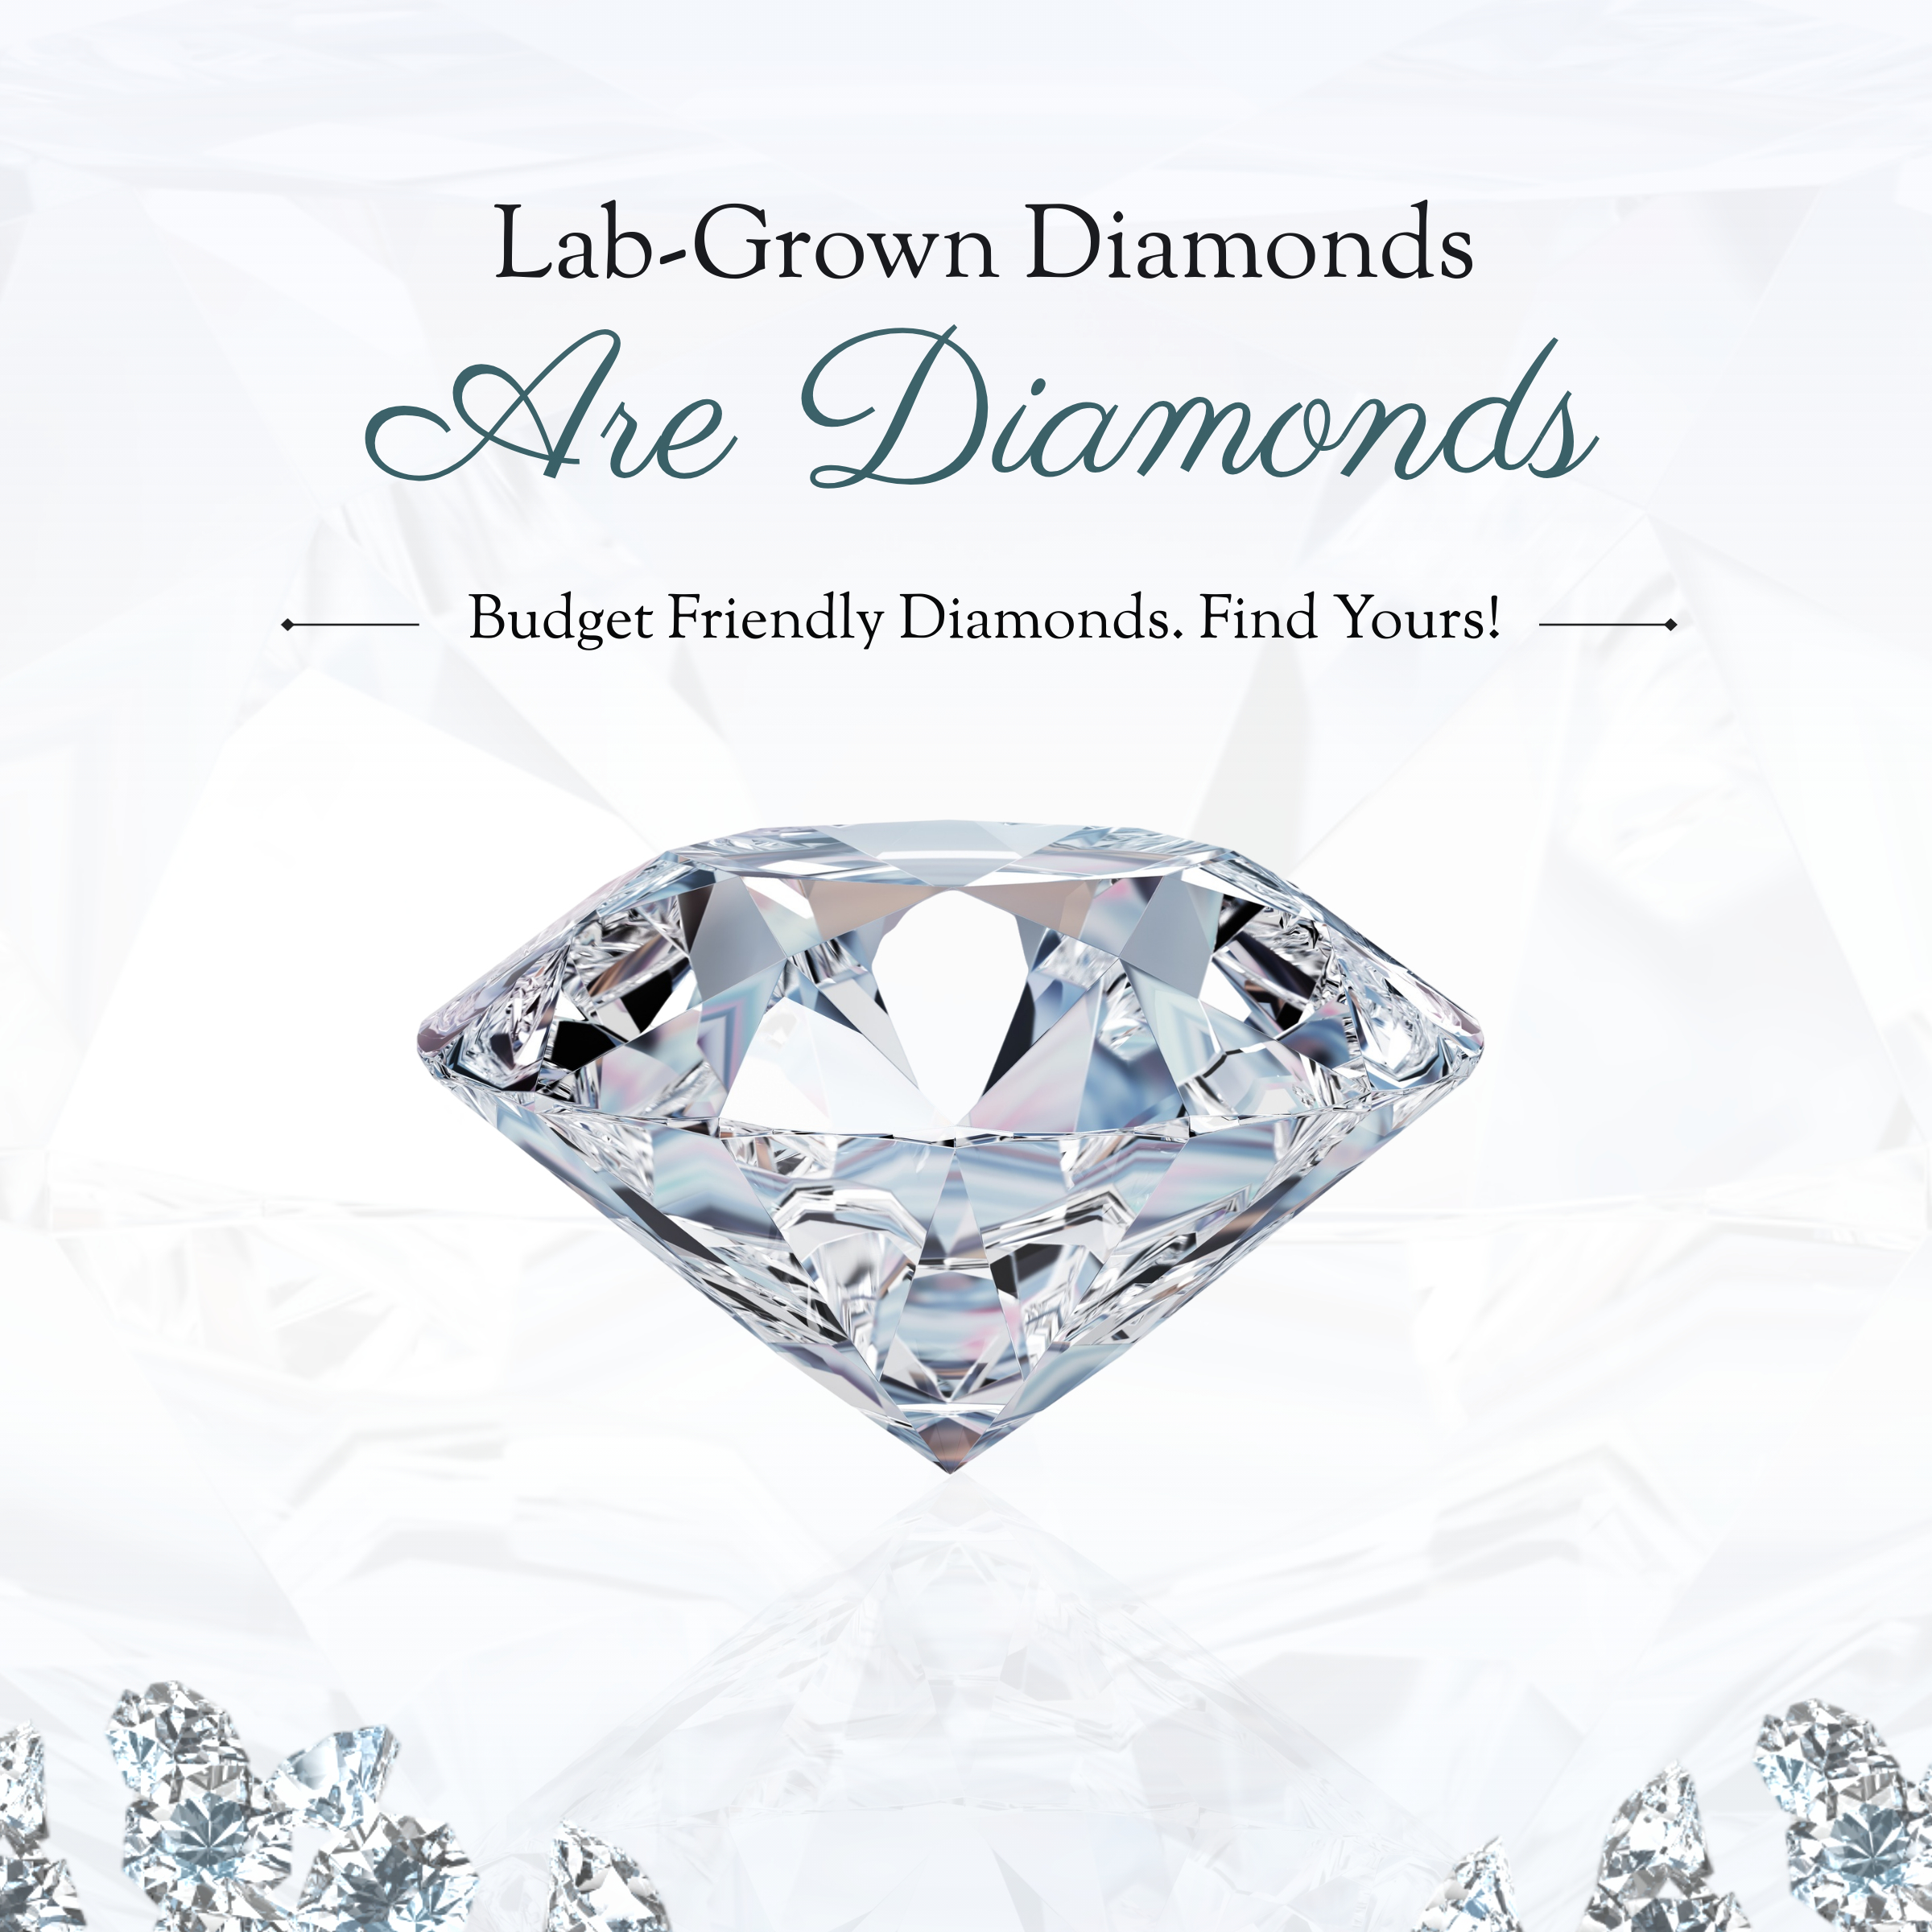 The Budget Friendly Diamond